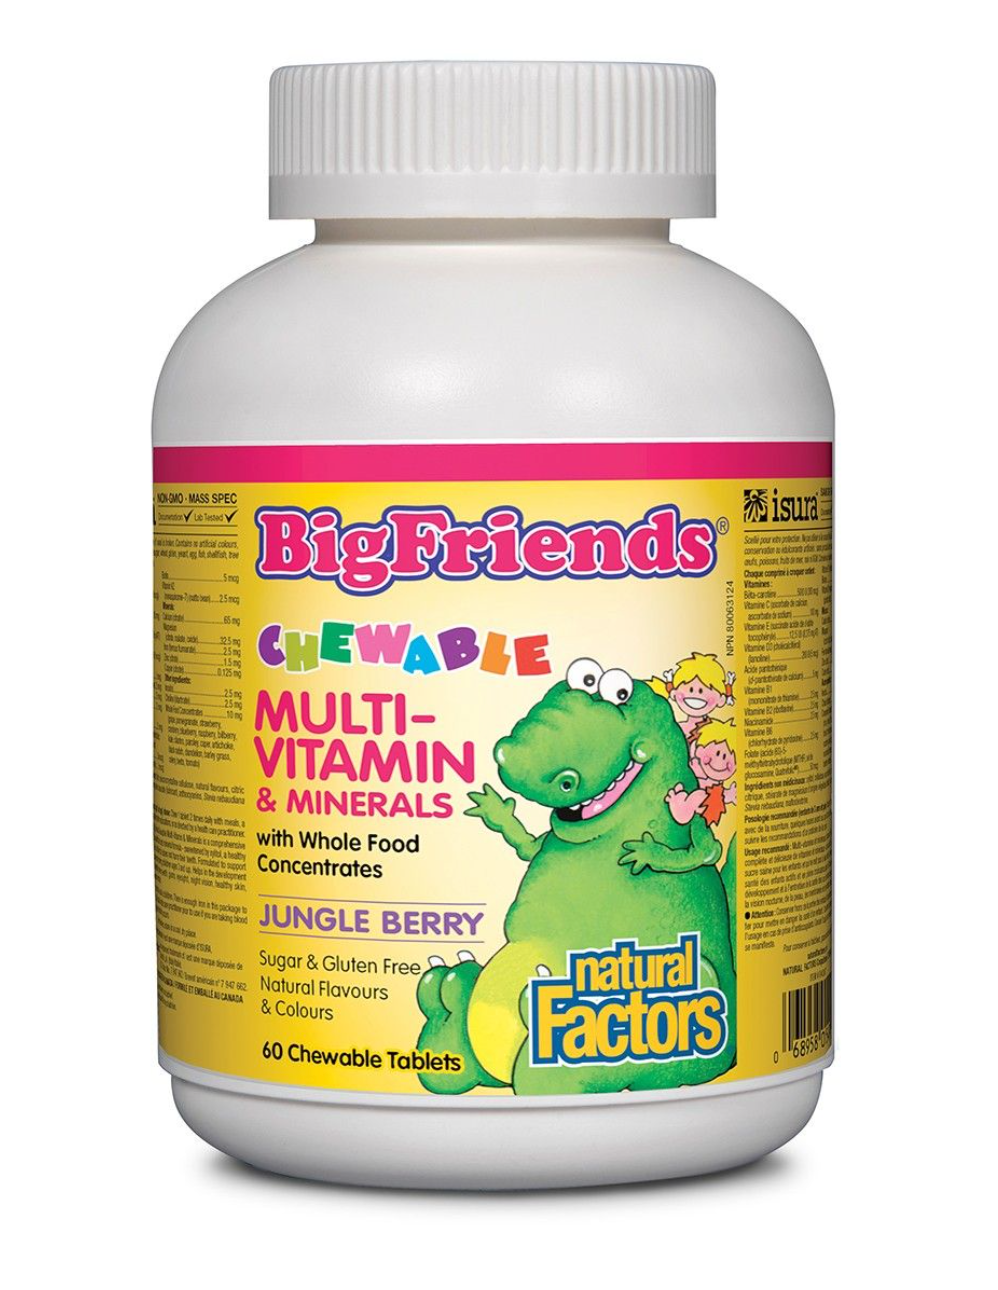 Big Friends Chewable Multi-Vitamin Natural Factors